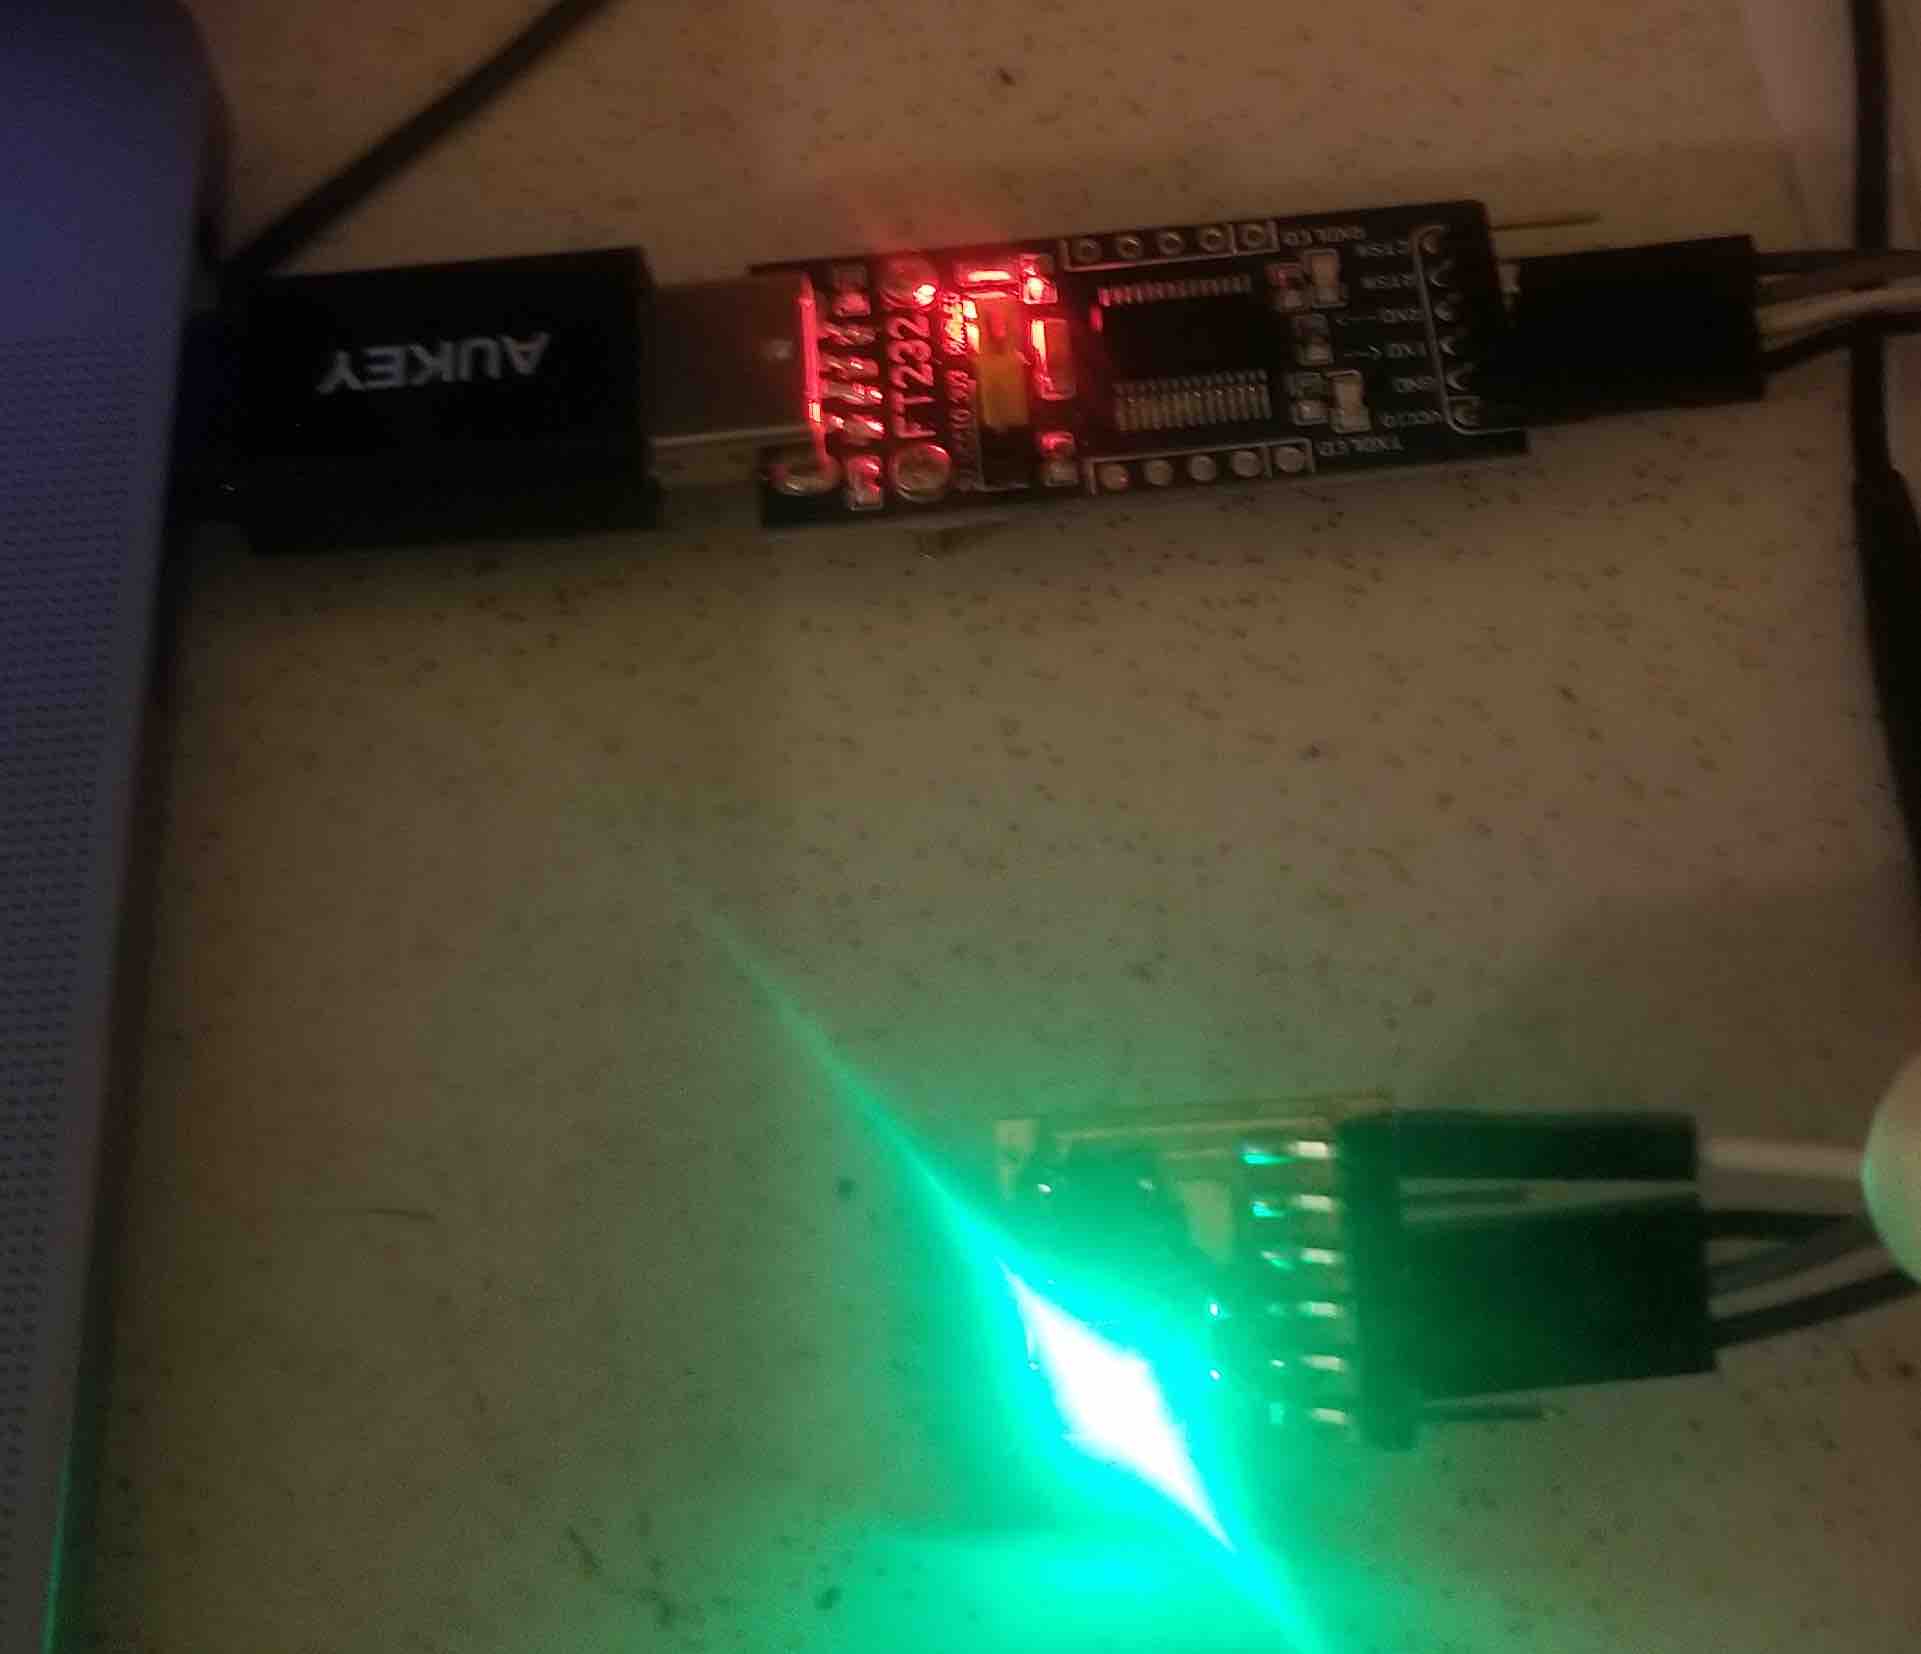 My ATtiny412 board with a lit up LED.